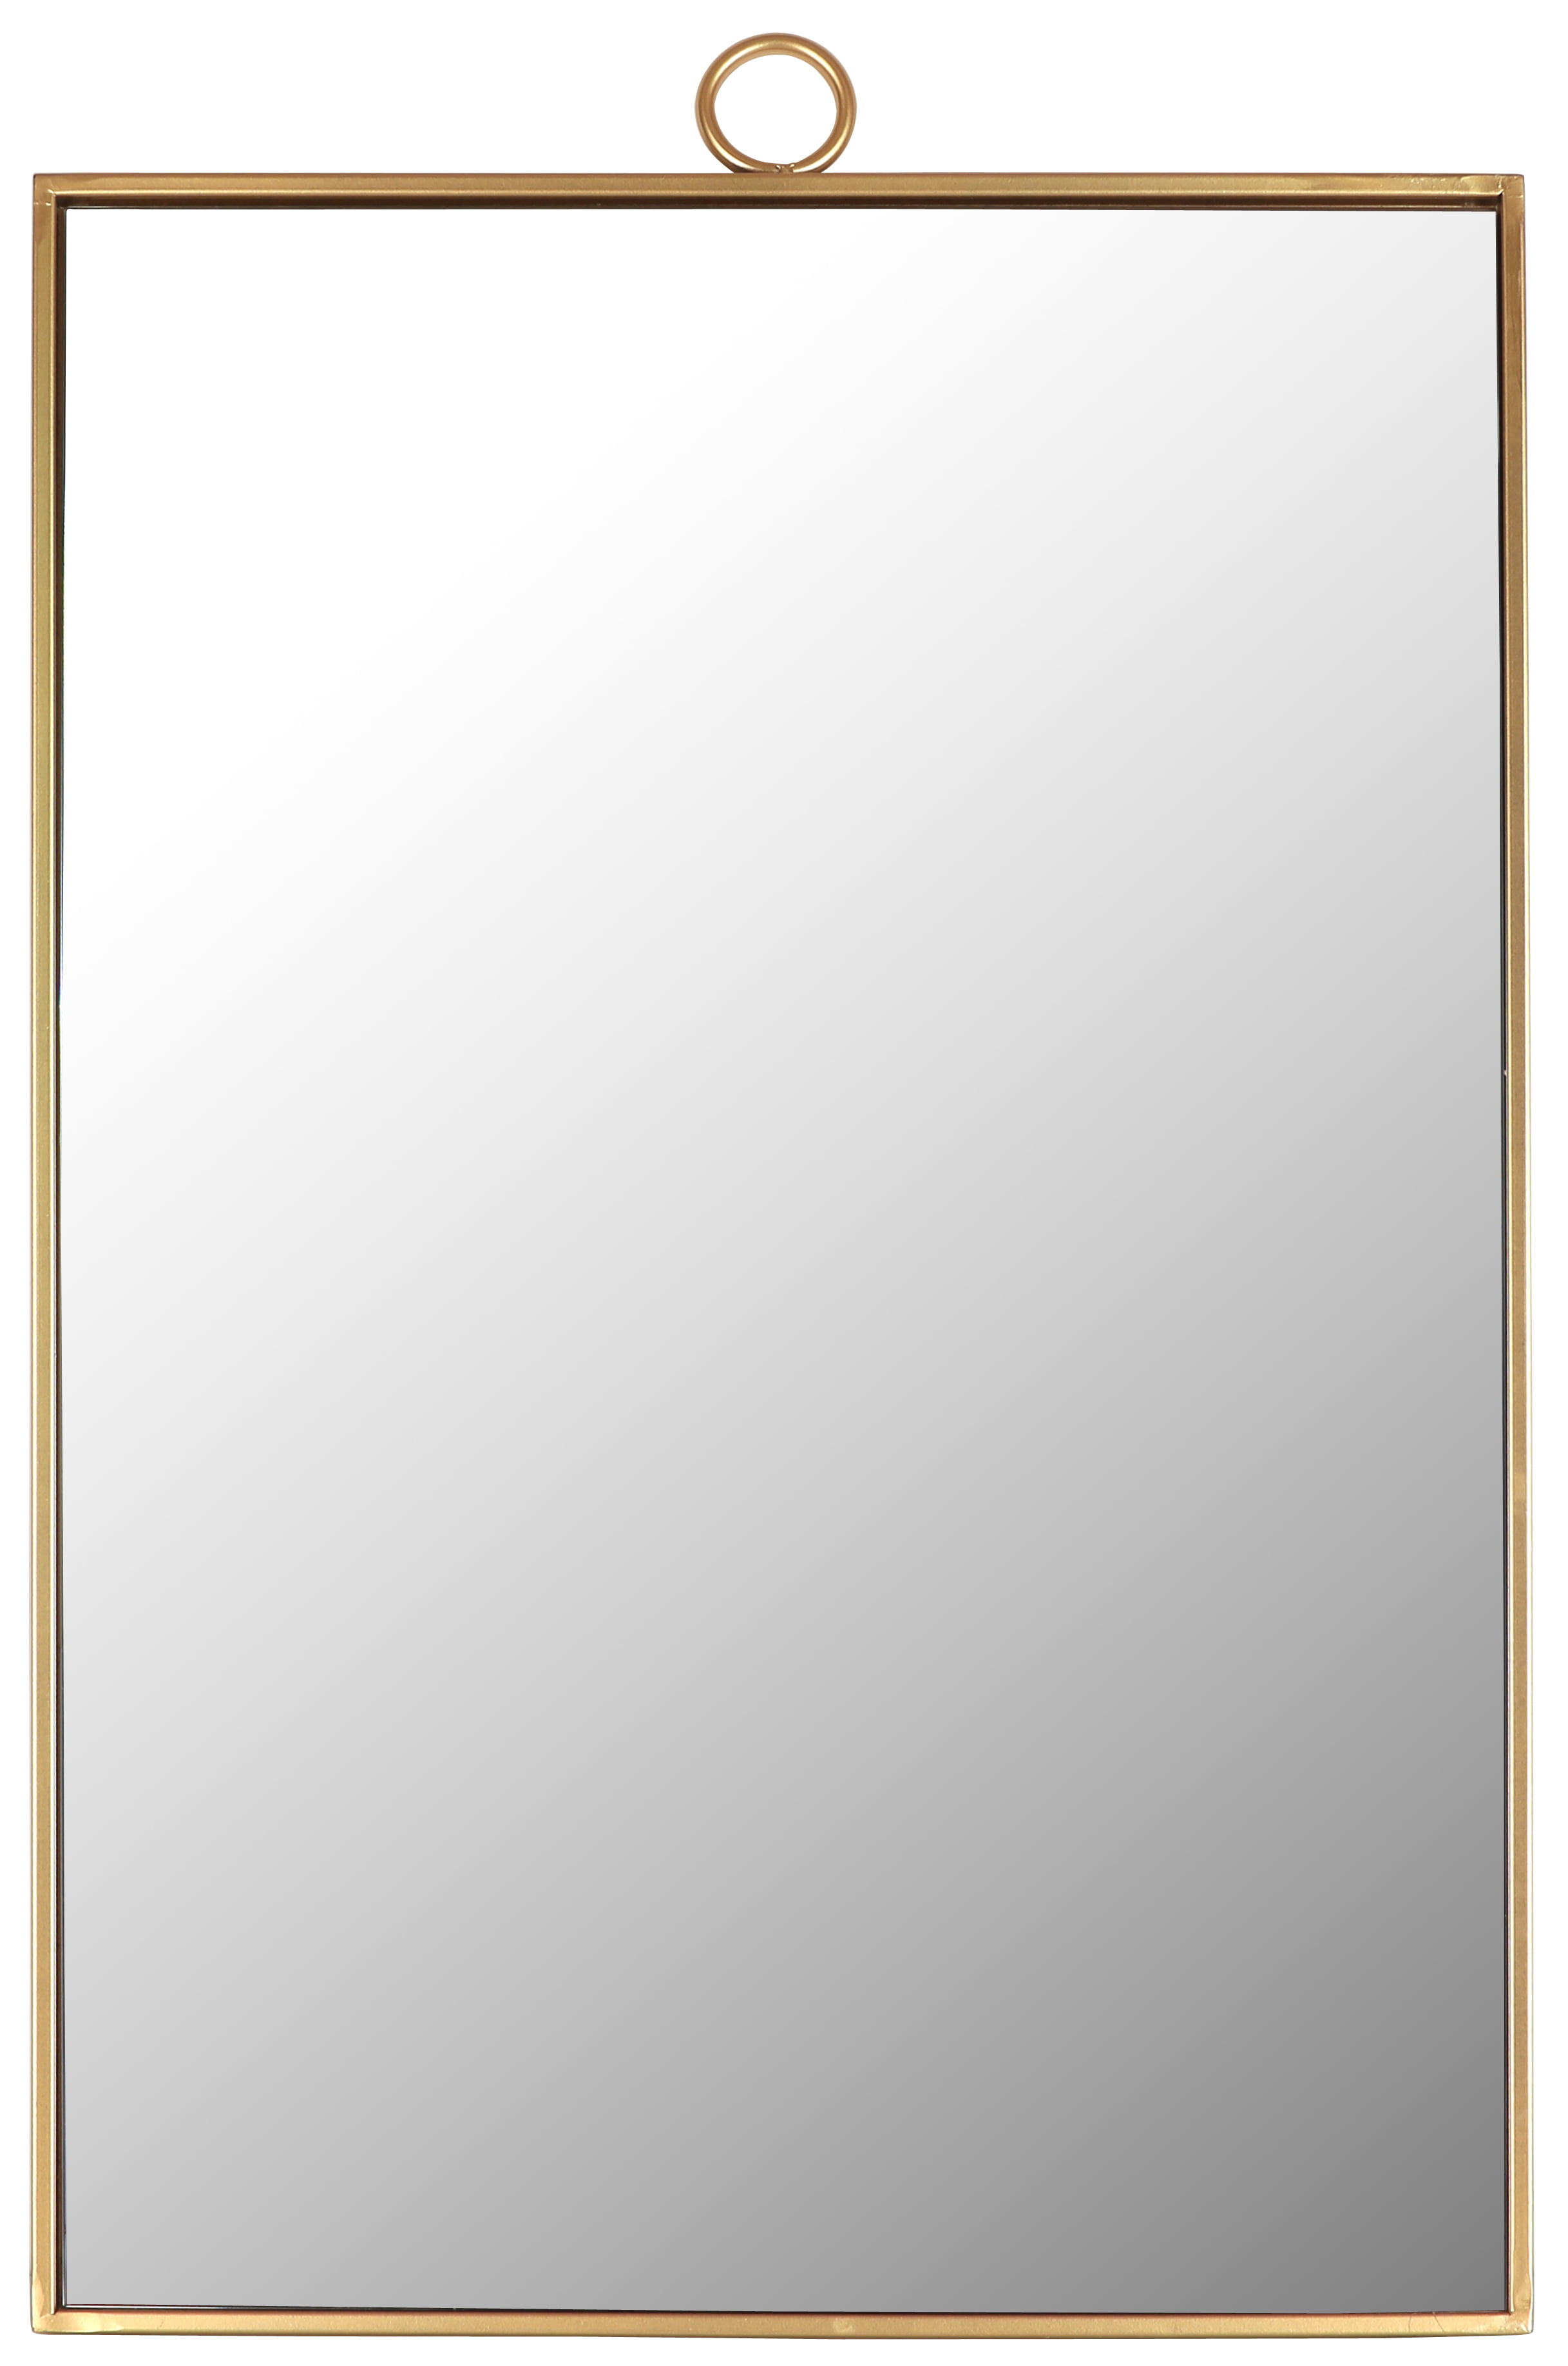 Gold Rectangular Mirror For Wall 20 X, Gold Rectangular Bathroom Mirror